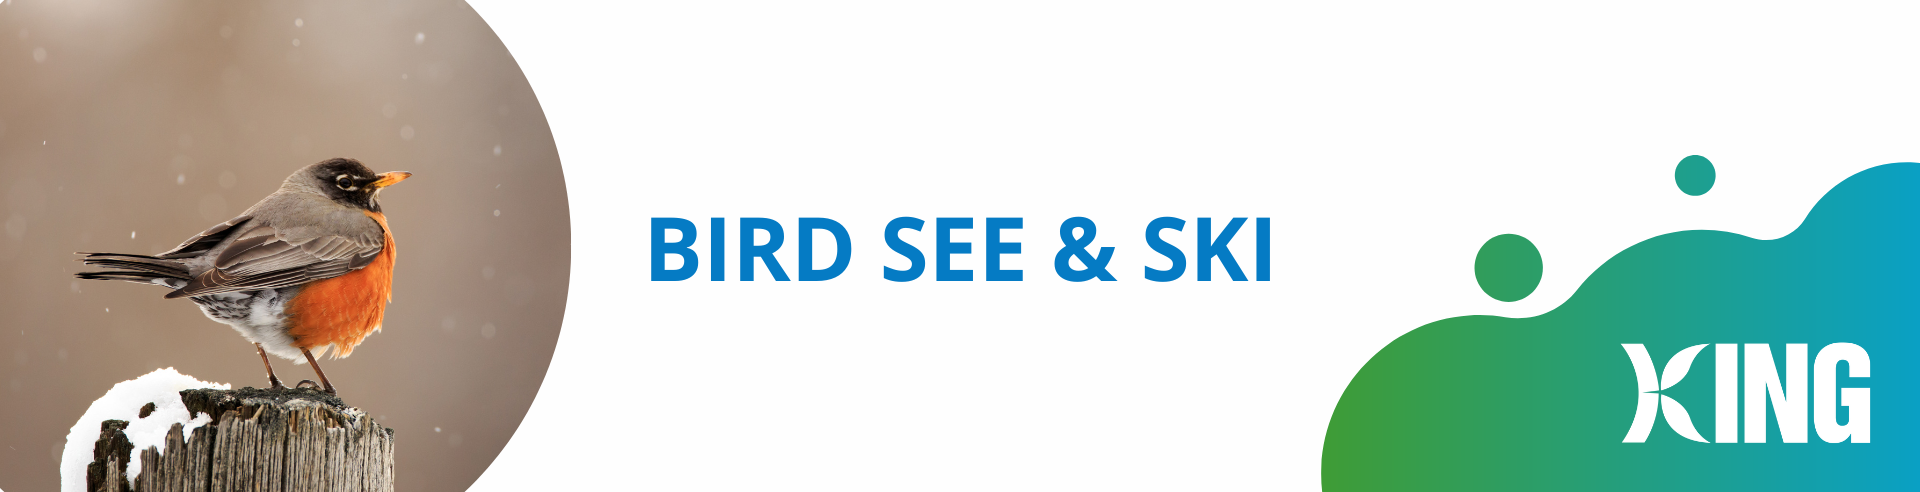 Bird See & Ski Event Header Template